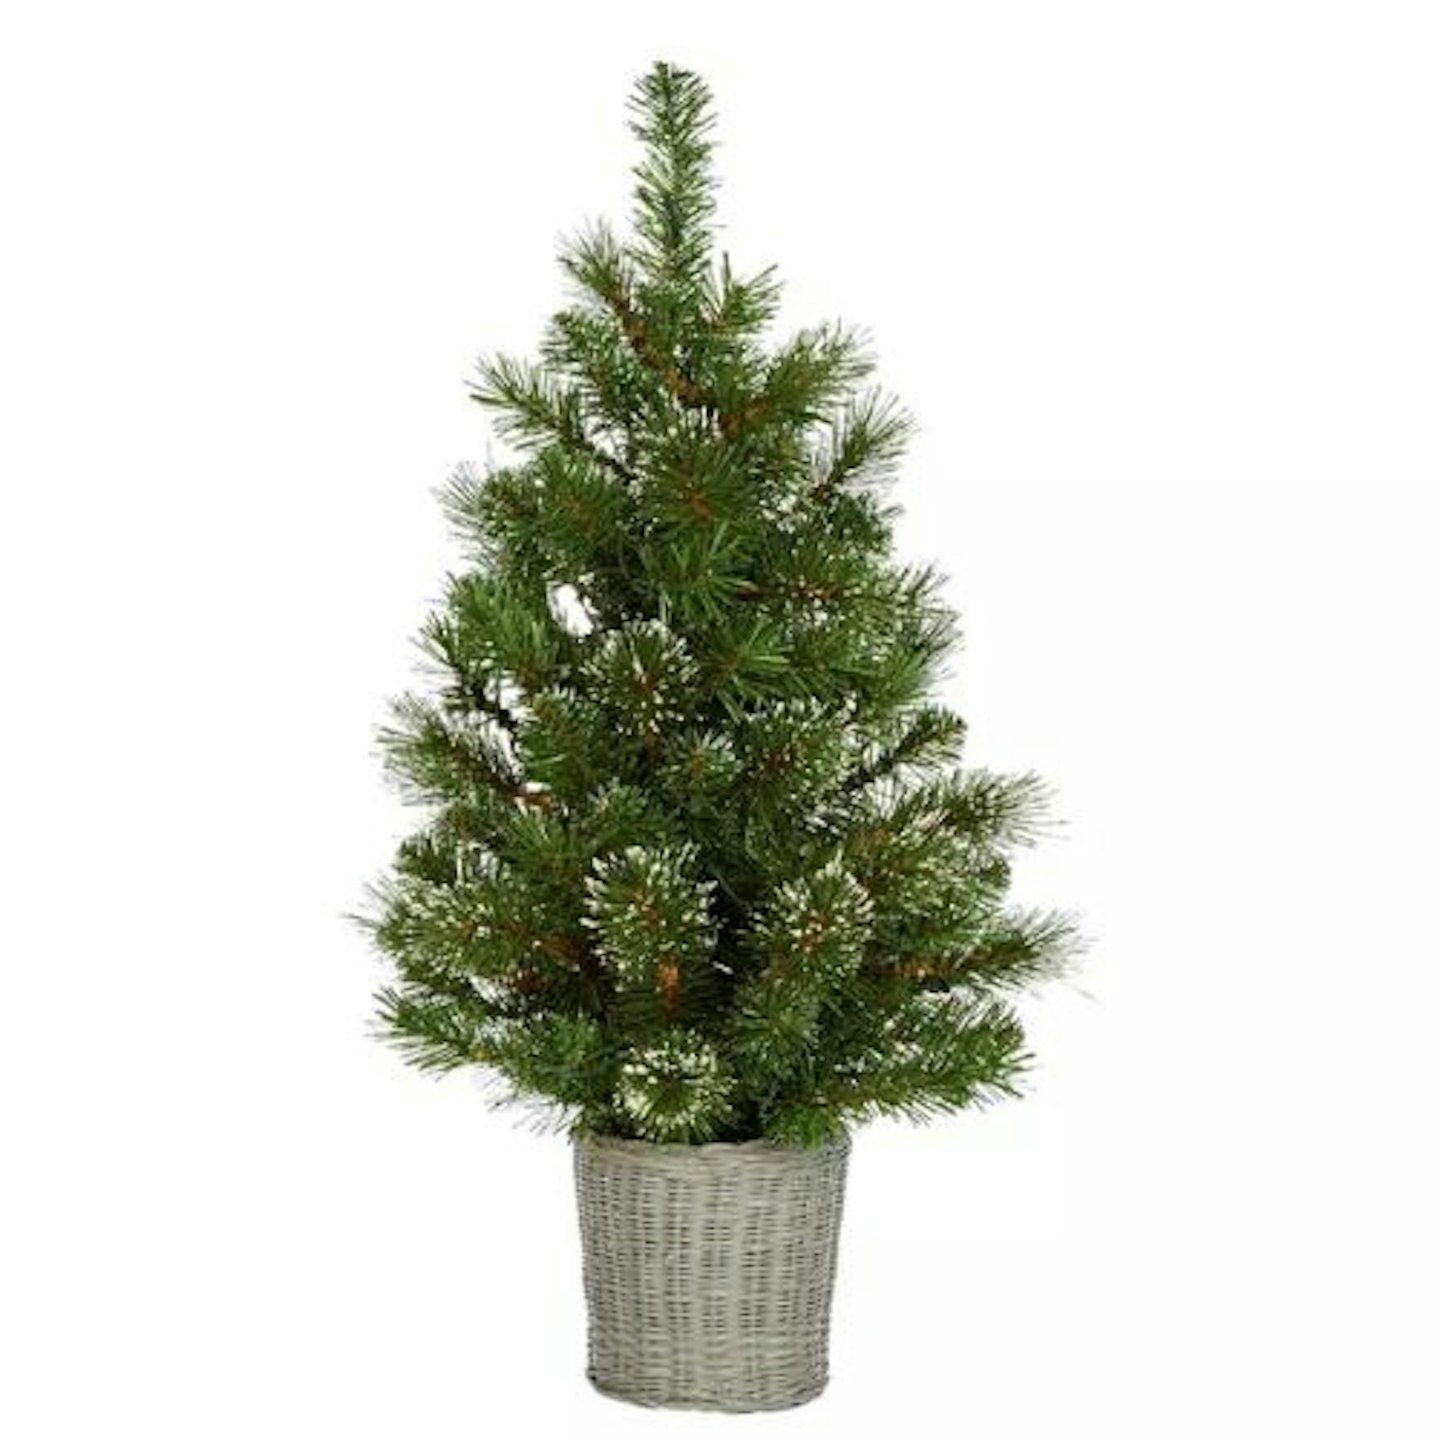 Best children's Christmas tree Habitat 2.5ft Pre lit Snowy Christmas Tree With Basket